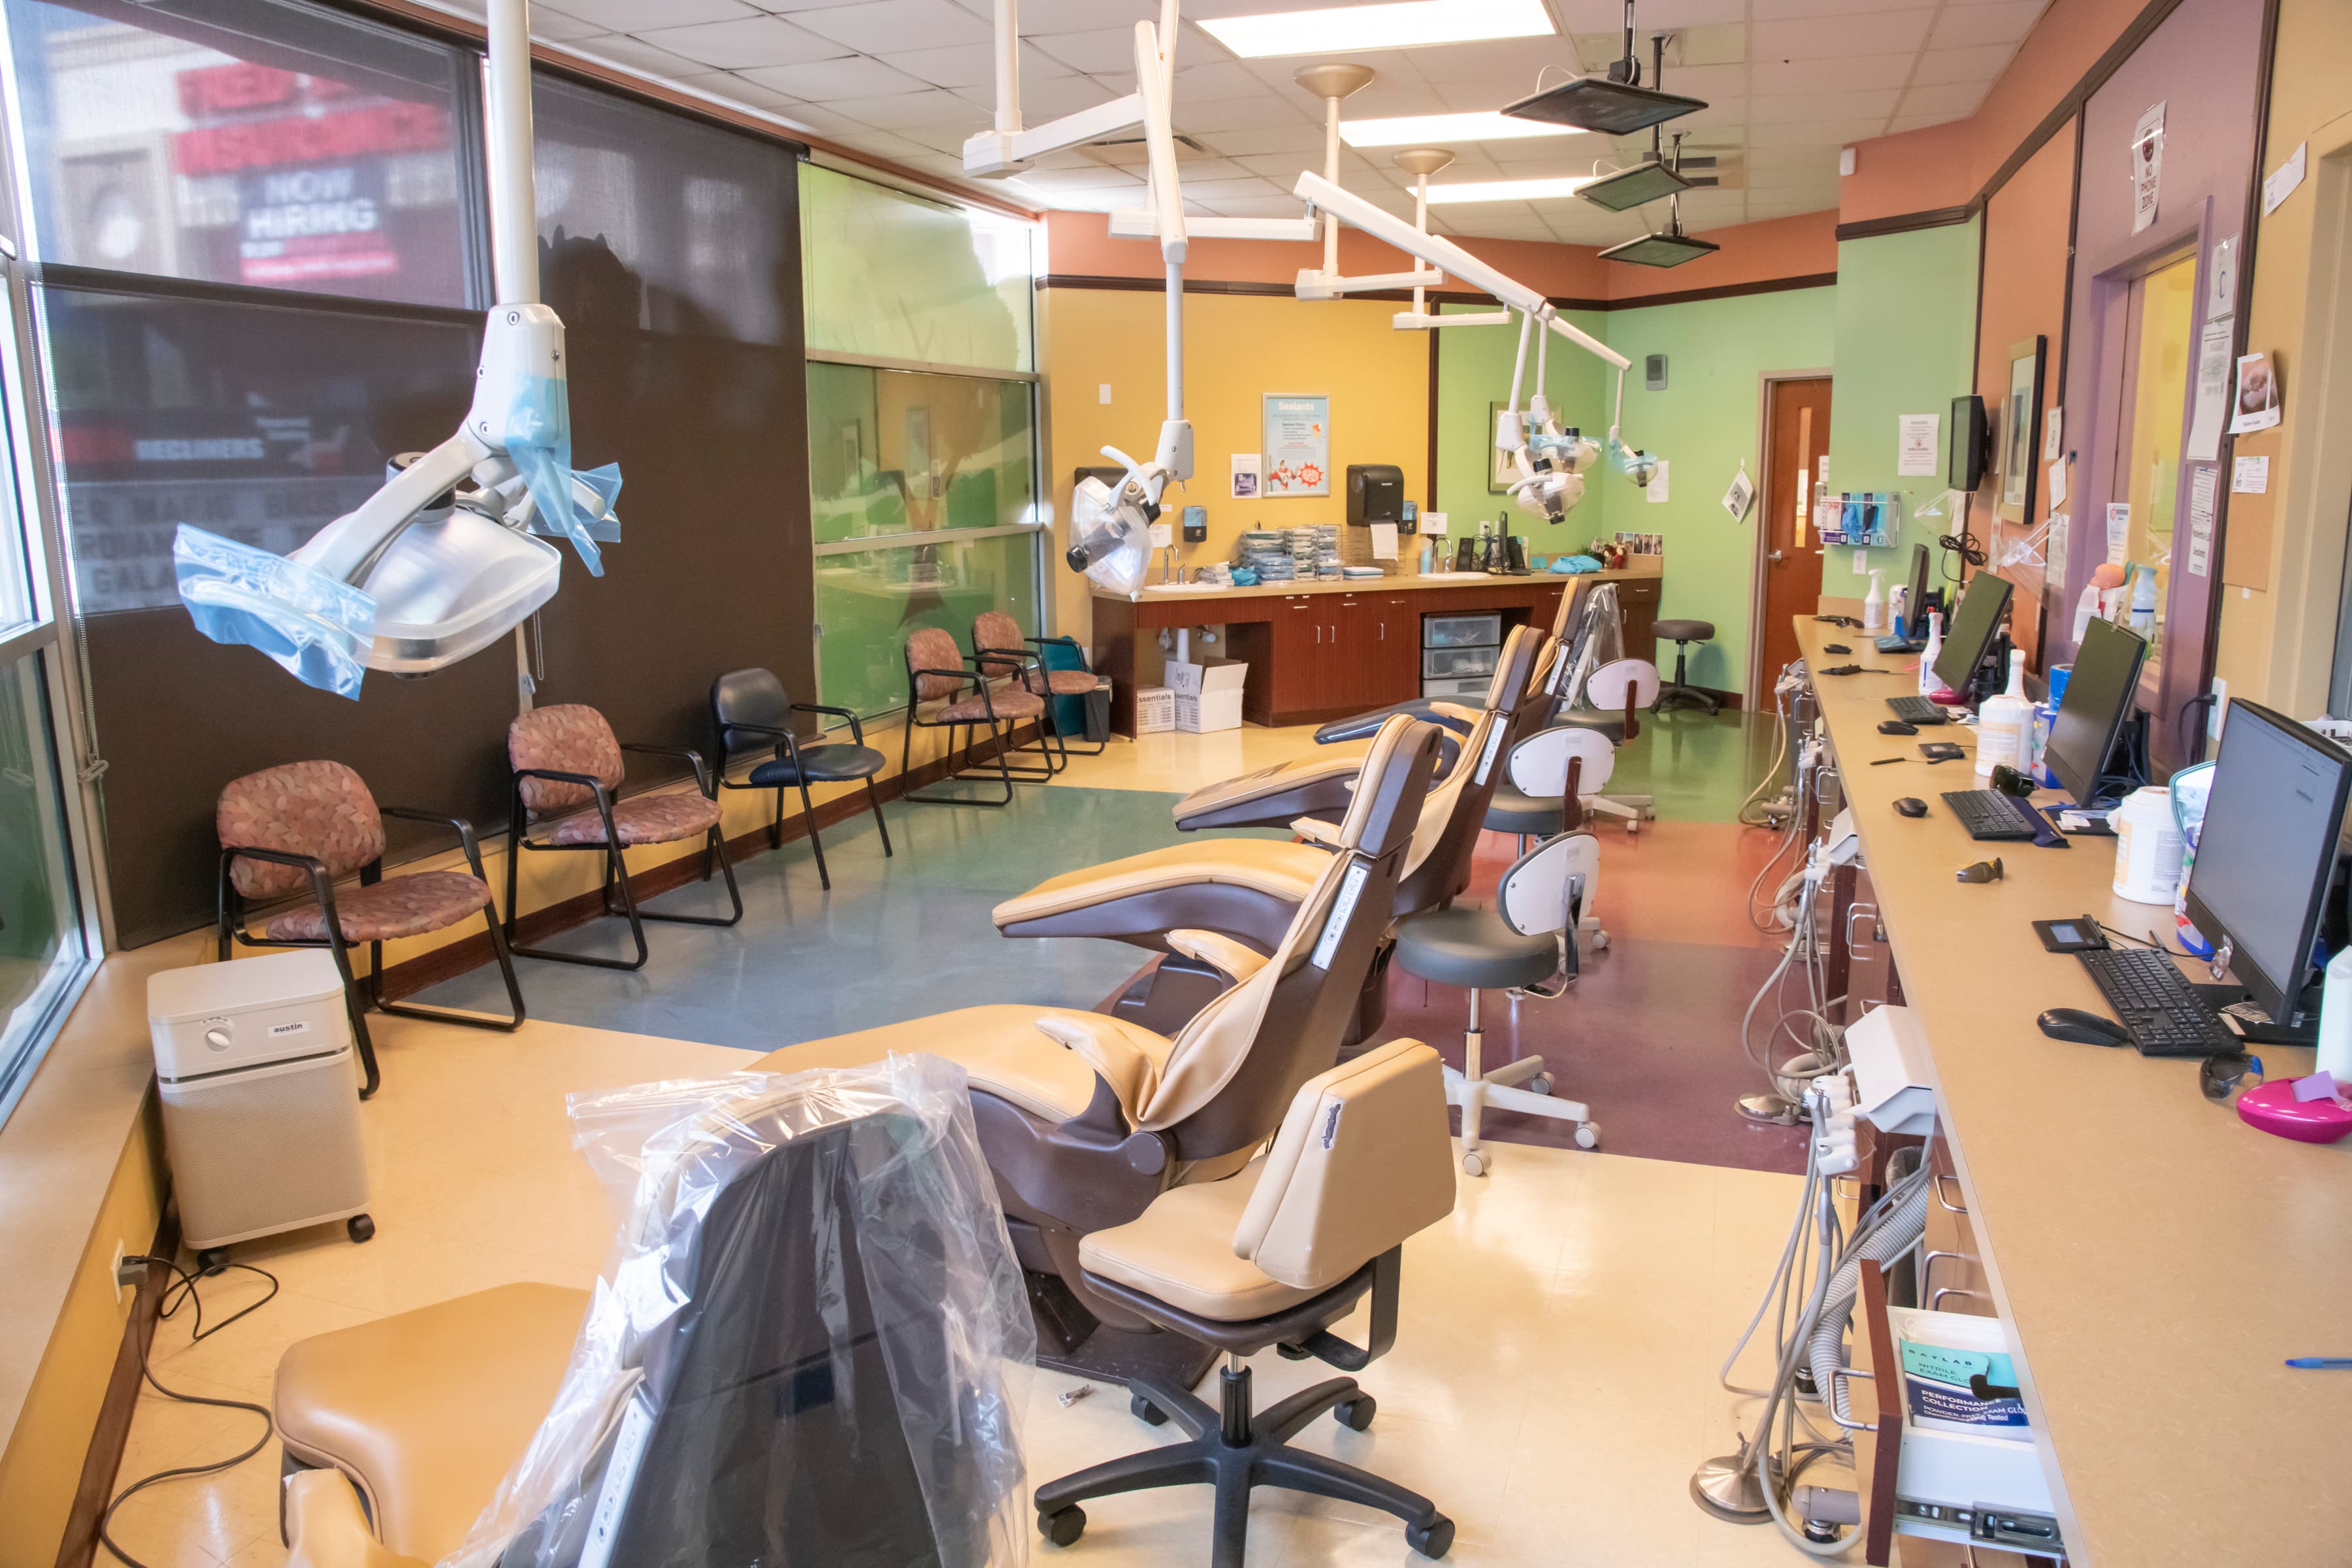 operatory area at a pediatric dental care office